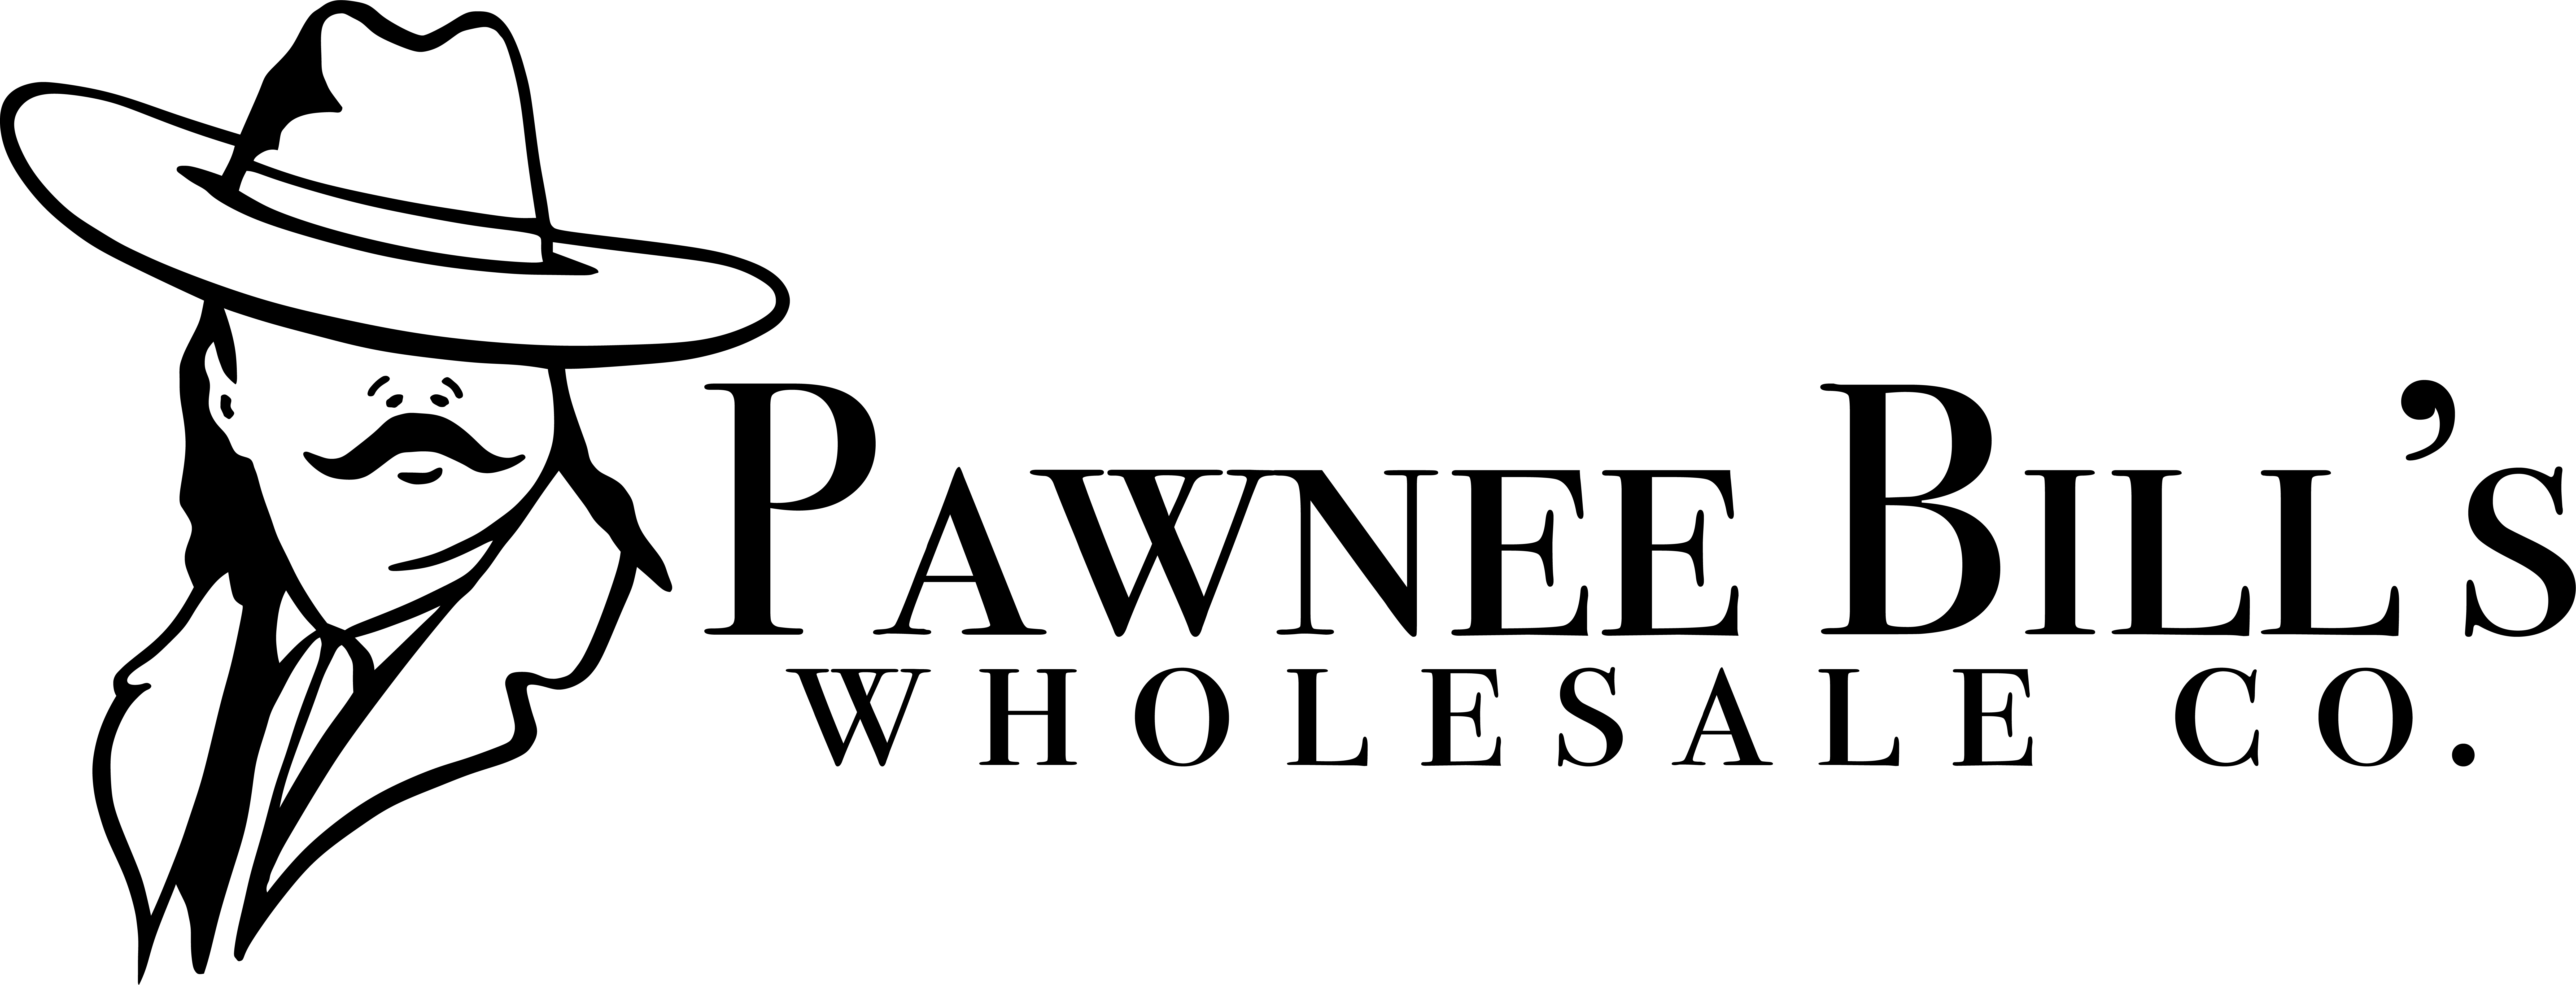 pawnee bill's logo